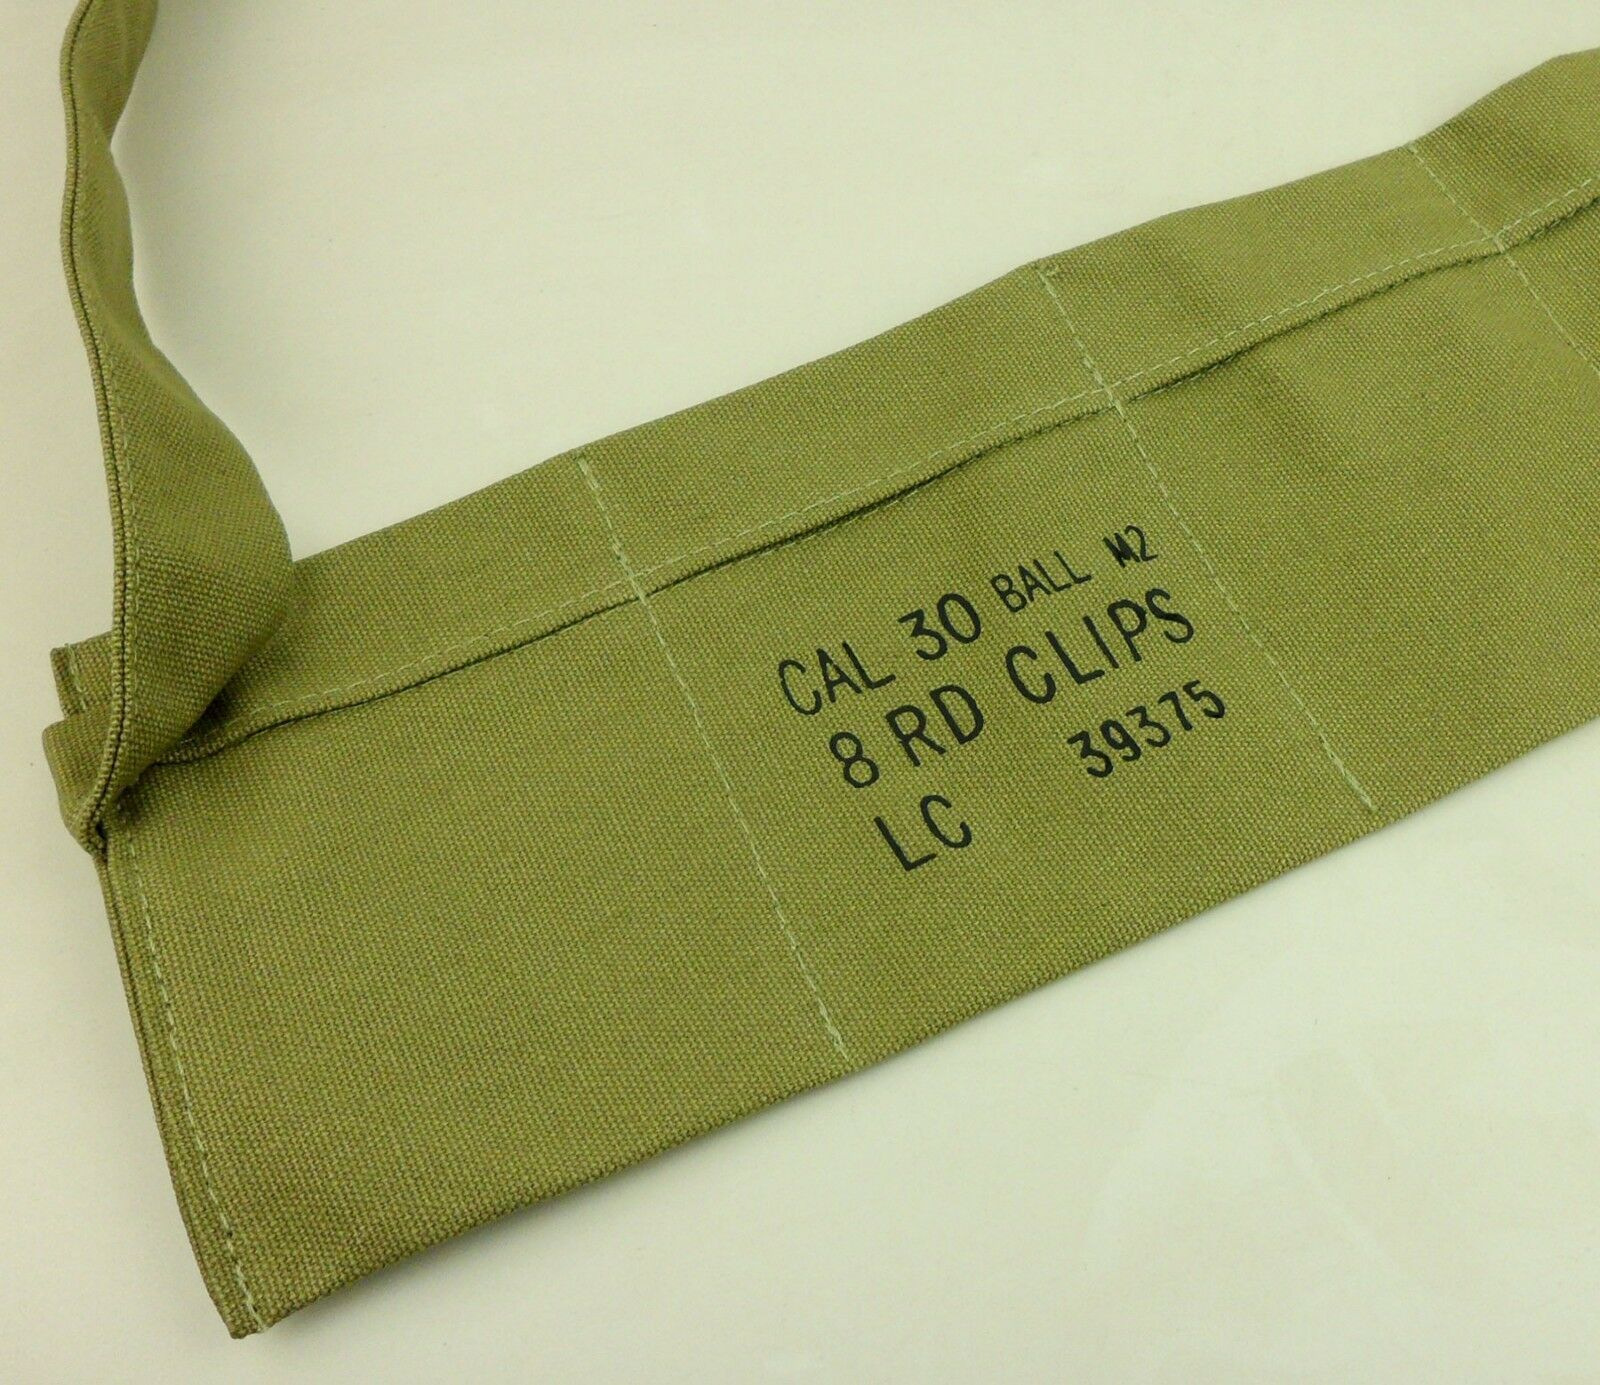 tomwang2012. WWII WW2 US M1 Garand Bandoleer Cotton AMMO POUCH CAL 30 BALL M2 8 RD CLIPS -MILITARY WAR REENACTMENTS